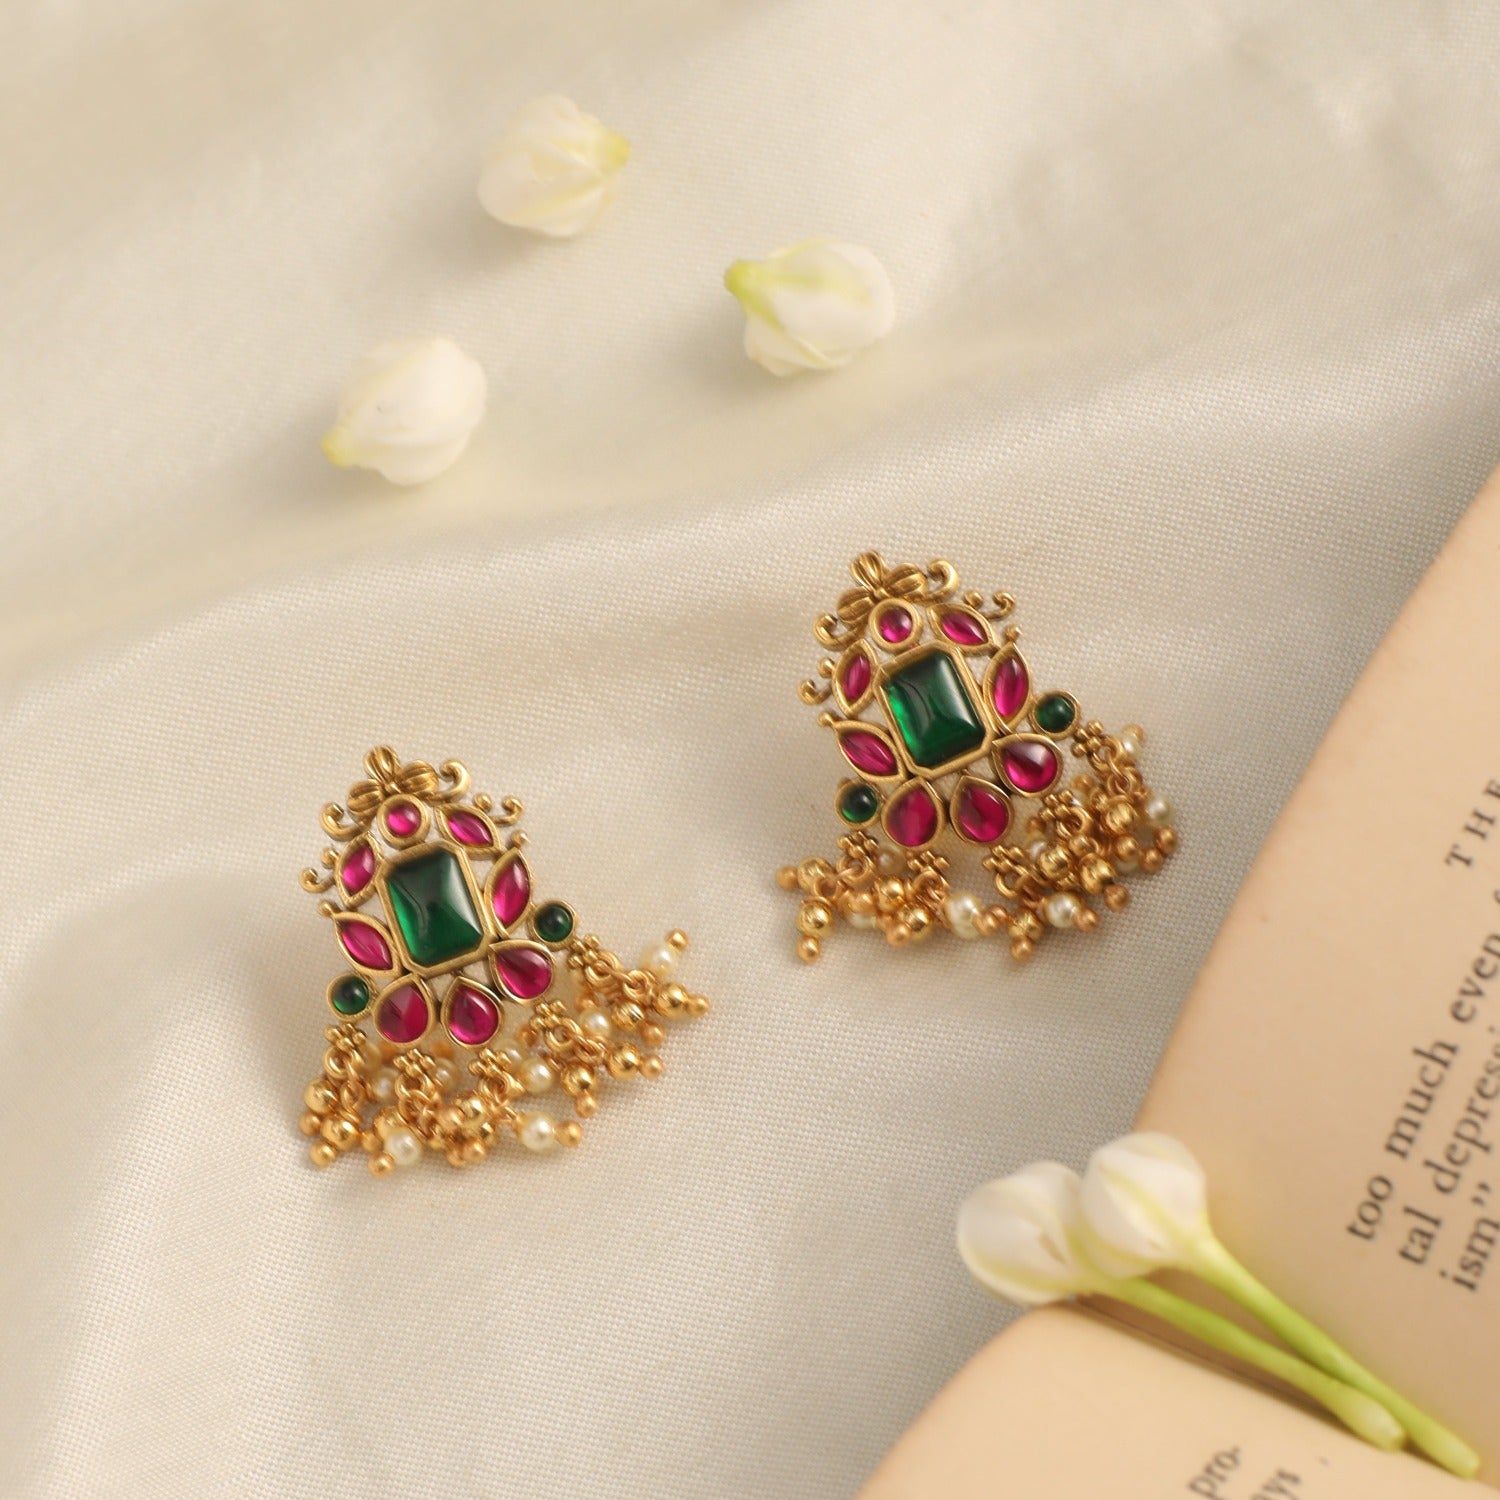 Discover 161+ kempu earrings designs latest